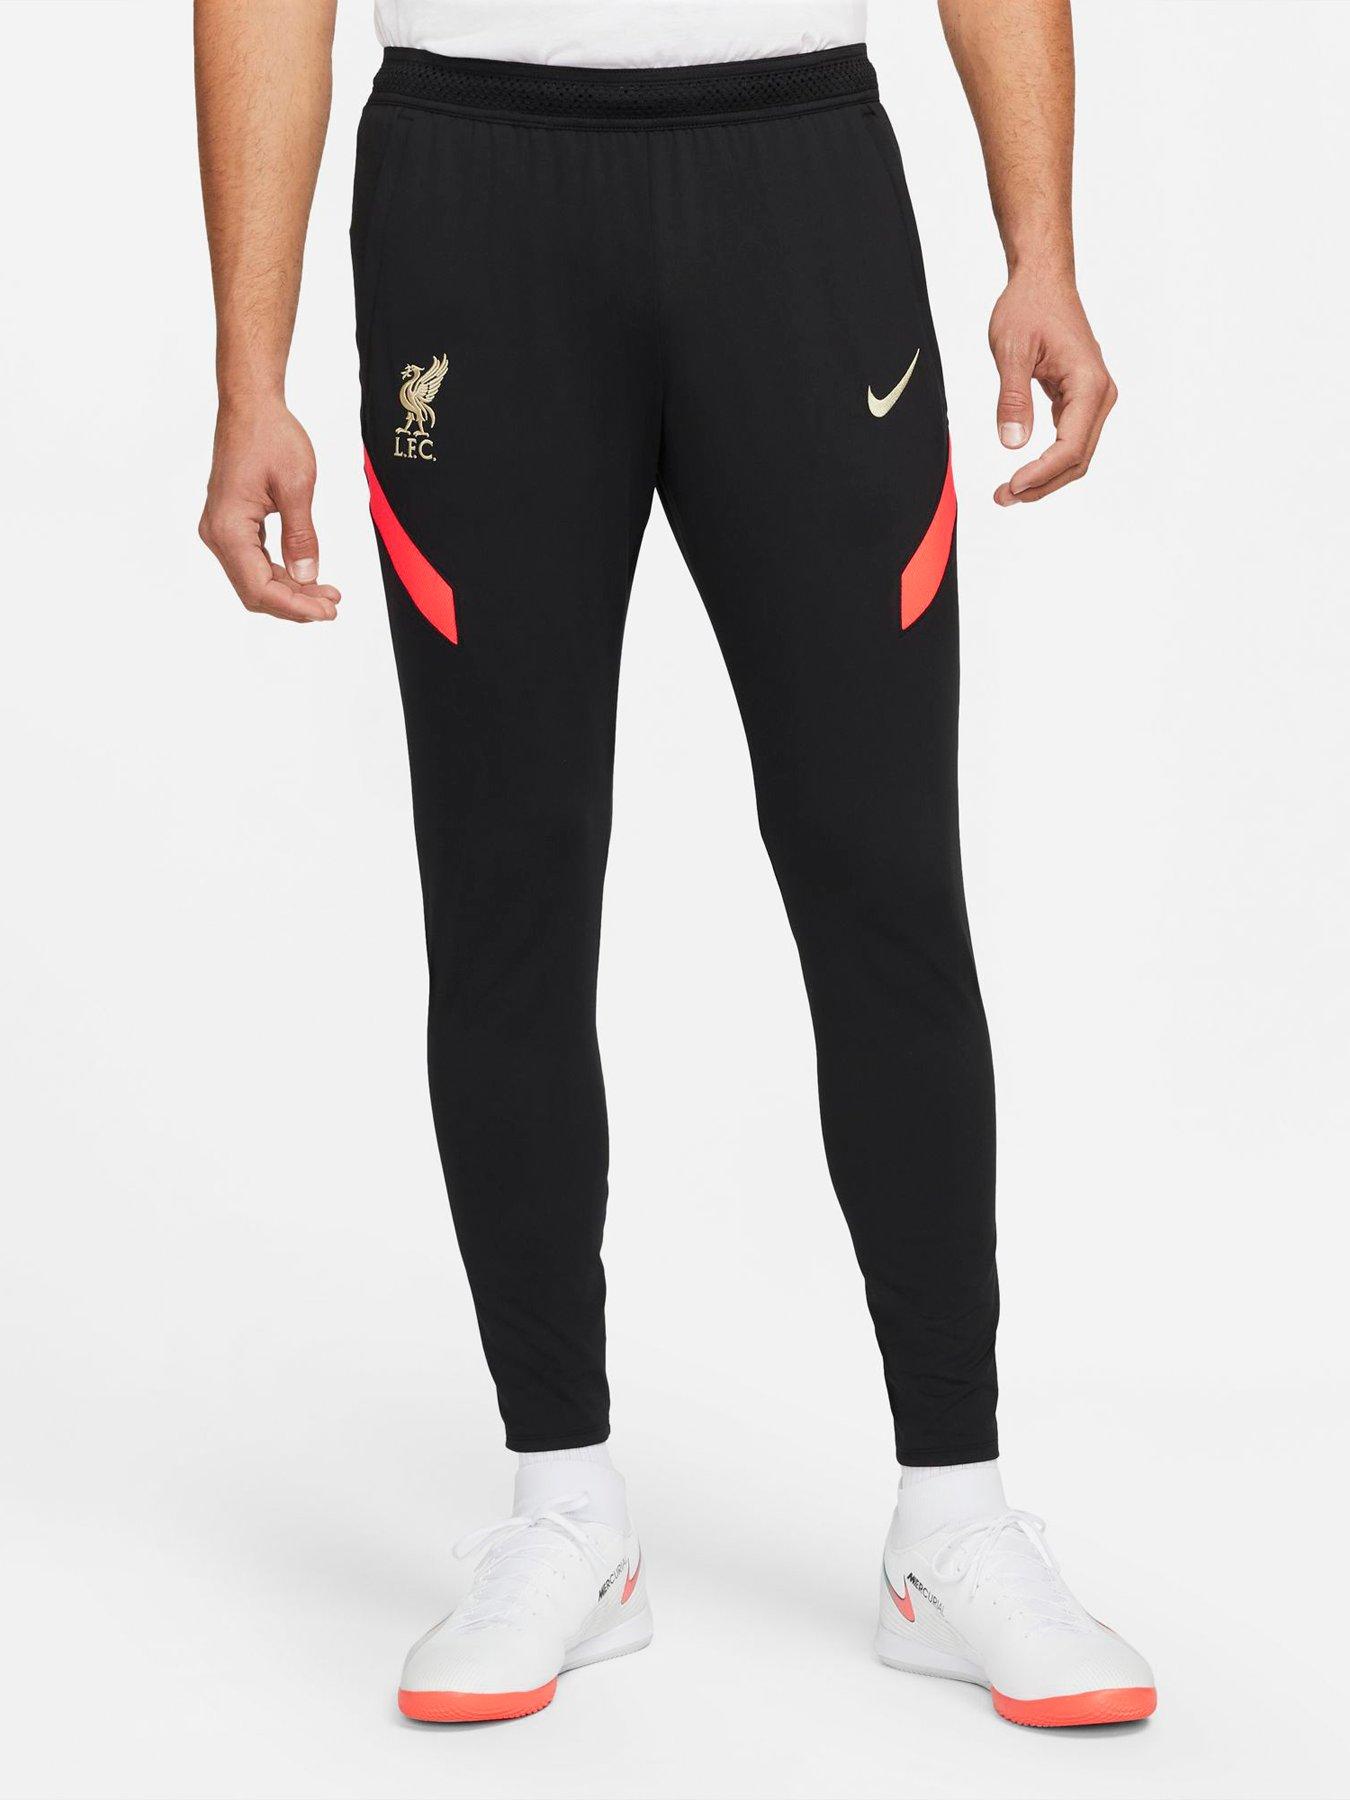  Liverpool FC Mens 21/22 Strike Pants - Black/Red